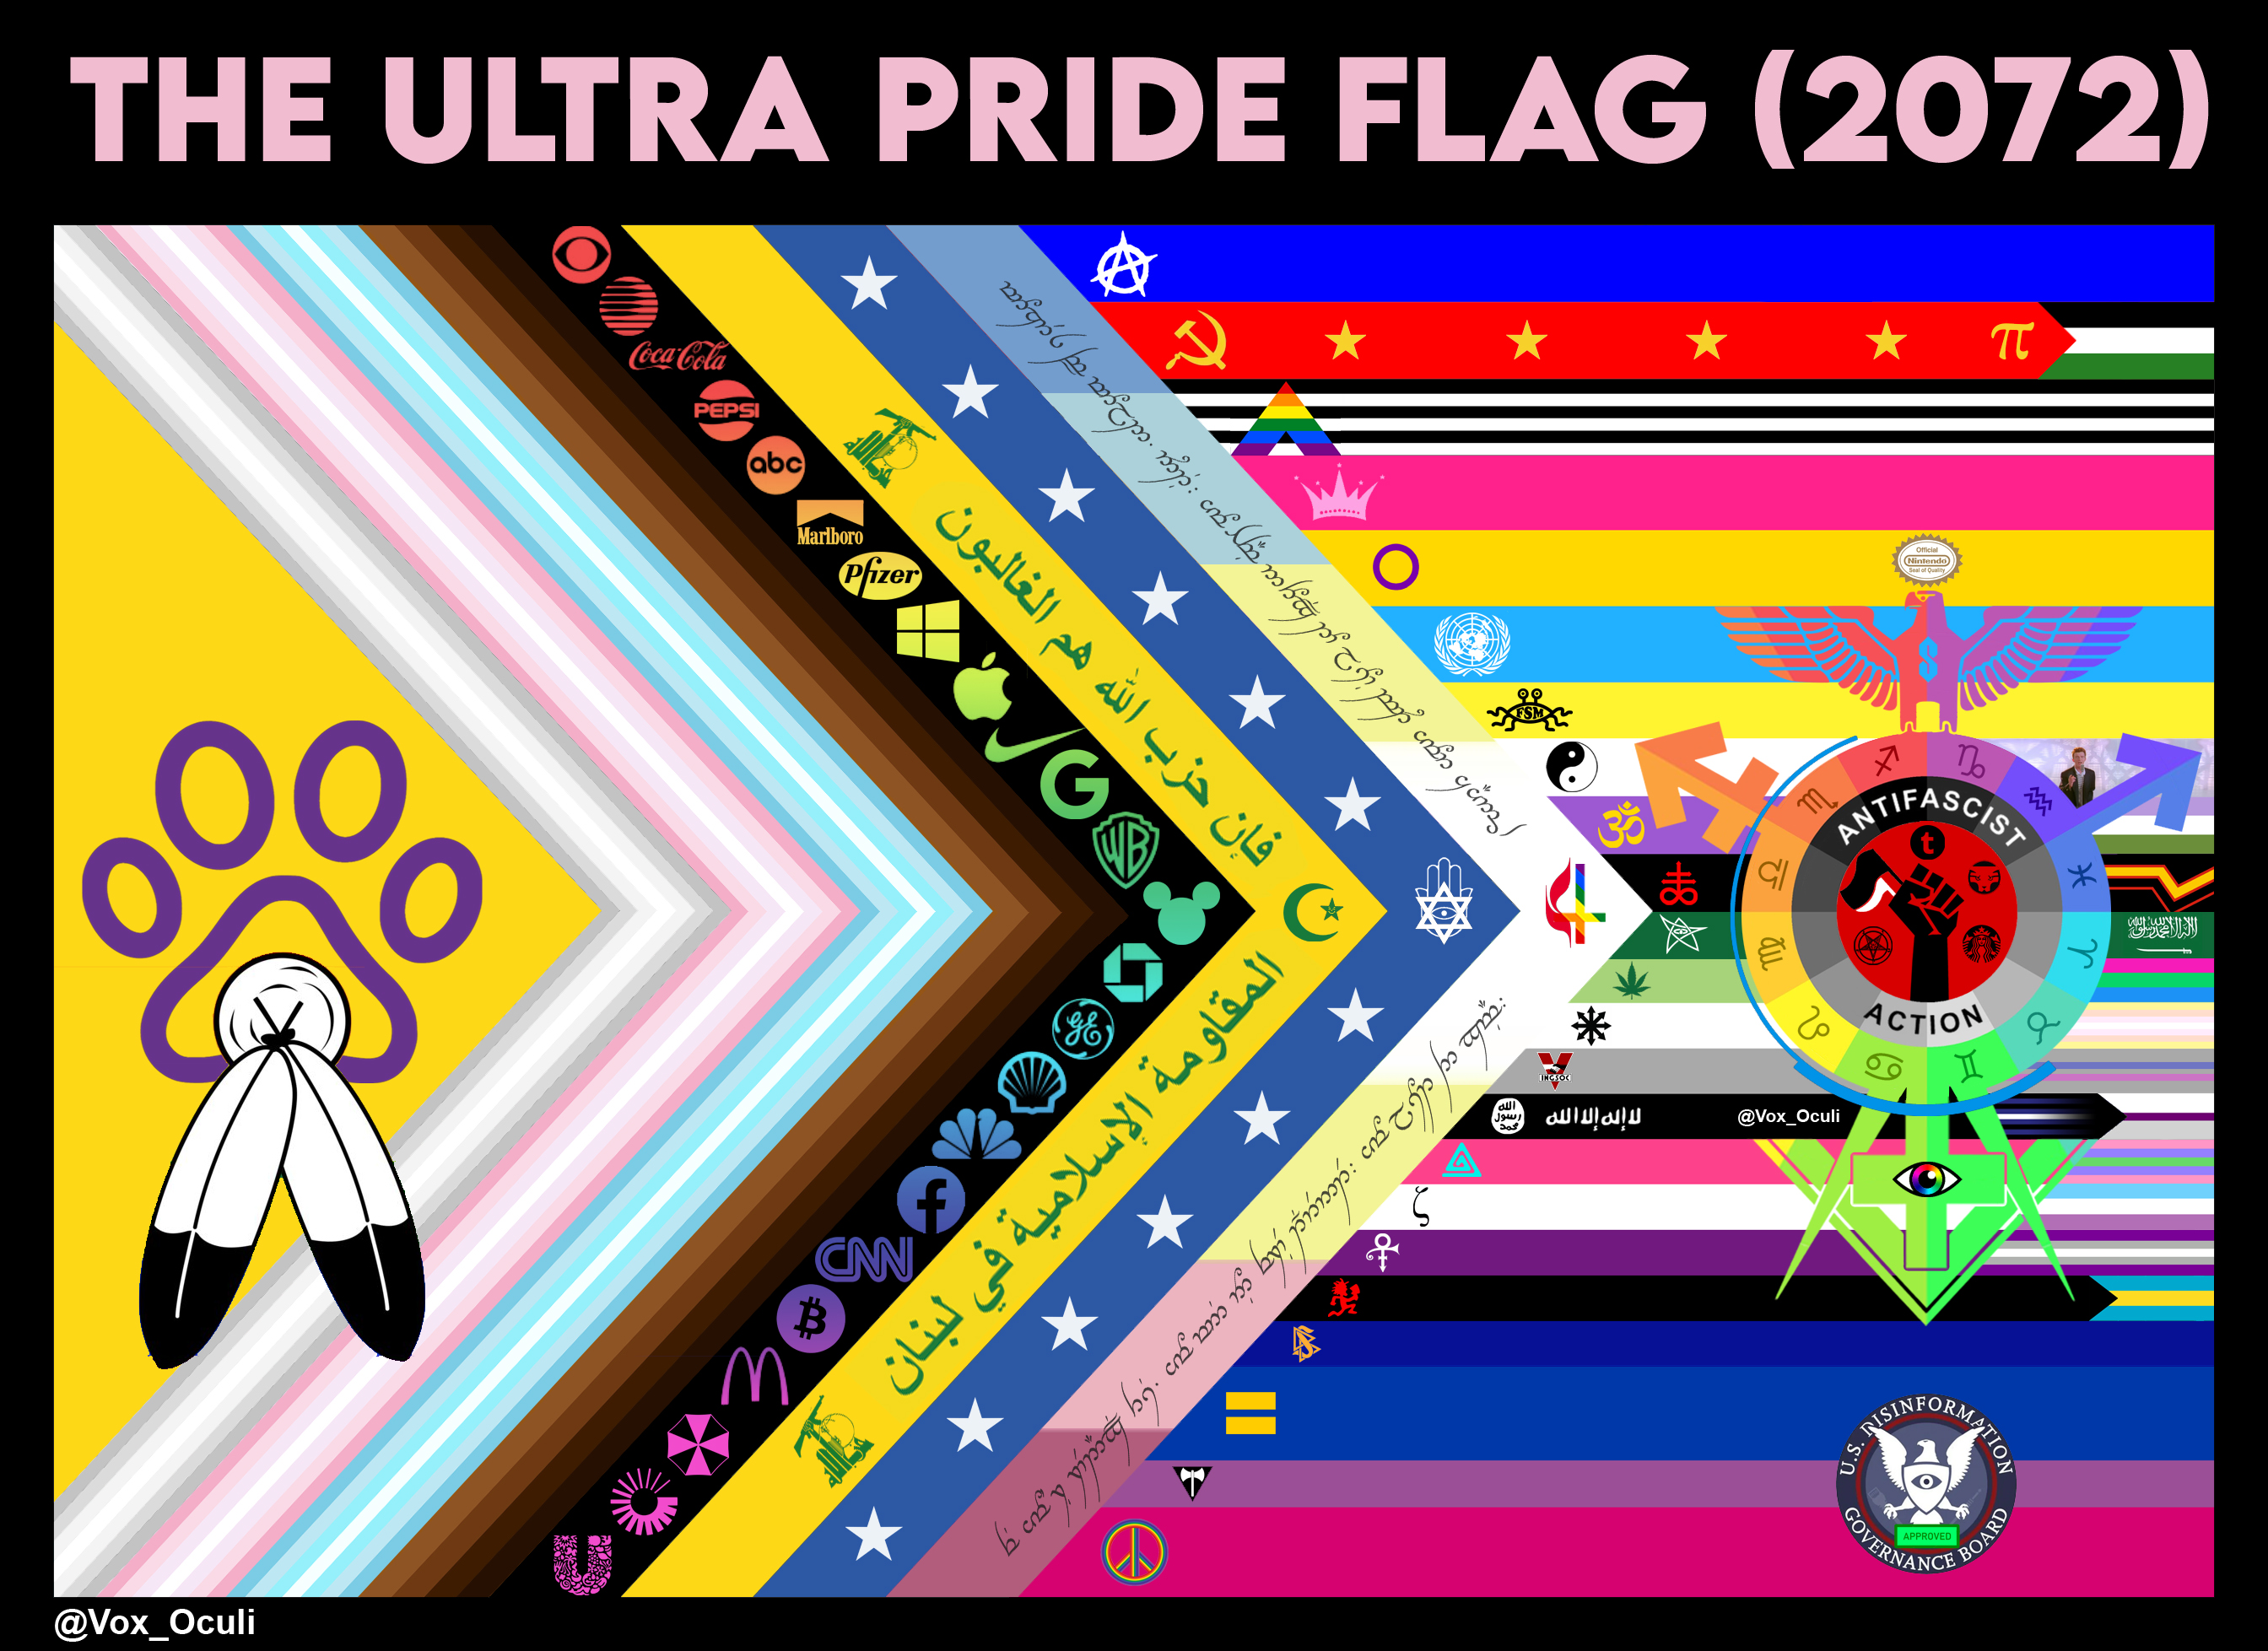 The Ultra Pride Flag 2072. By @Vox_Oculi